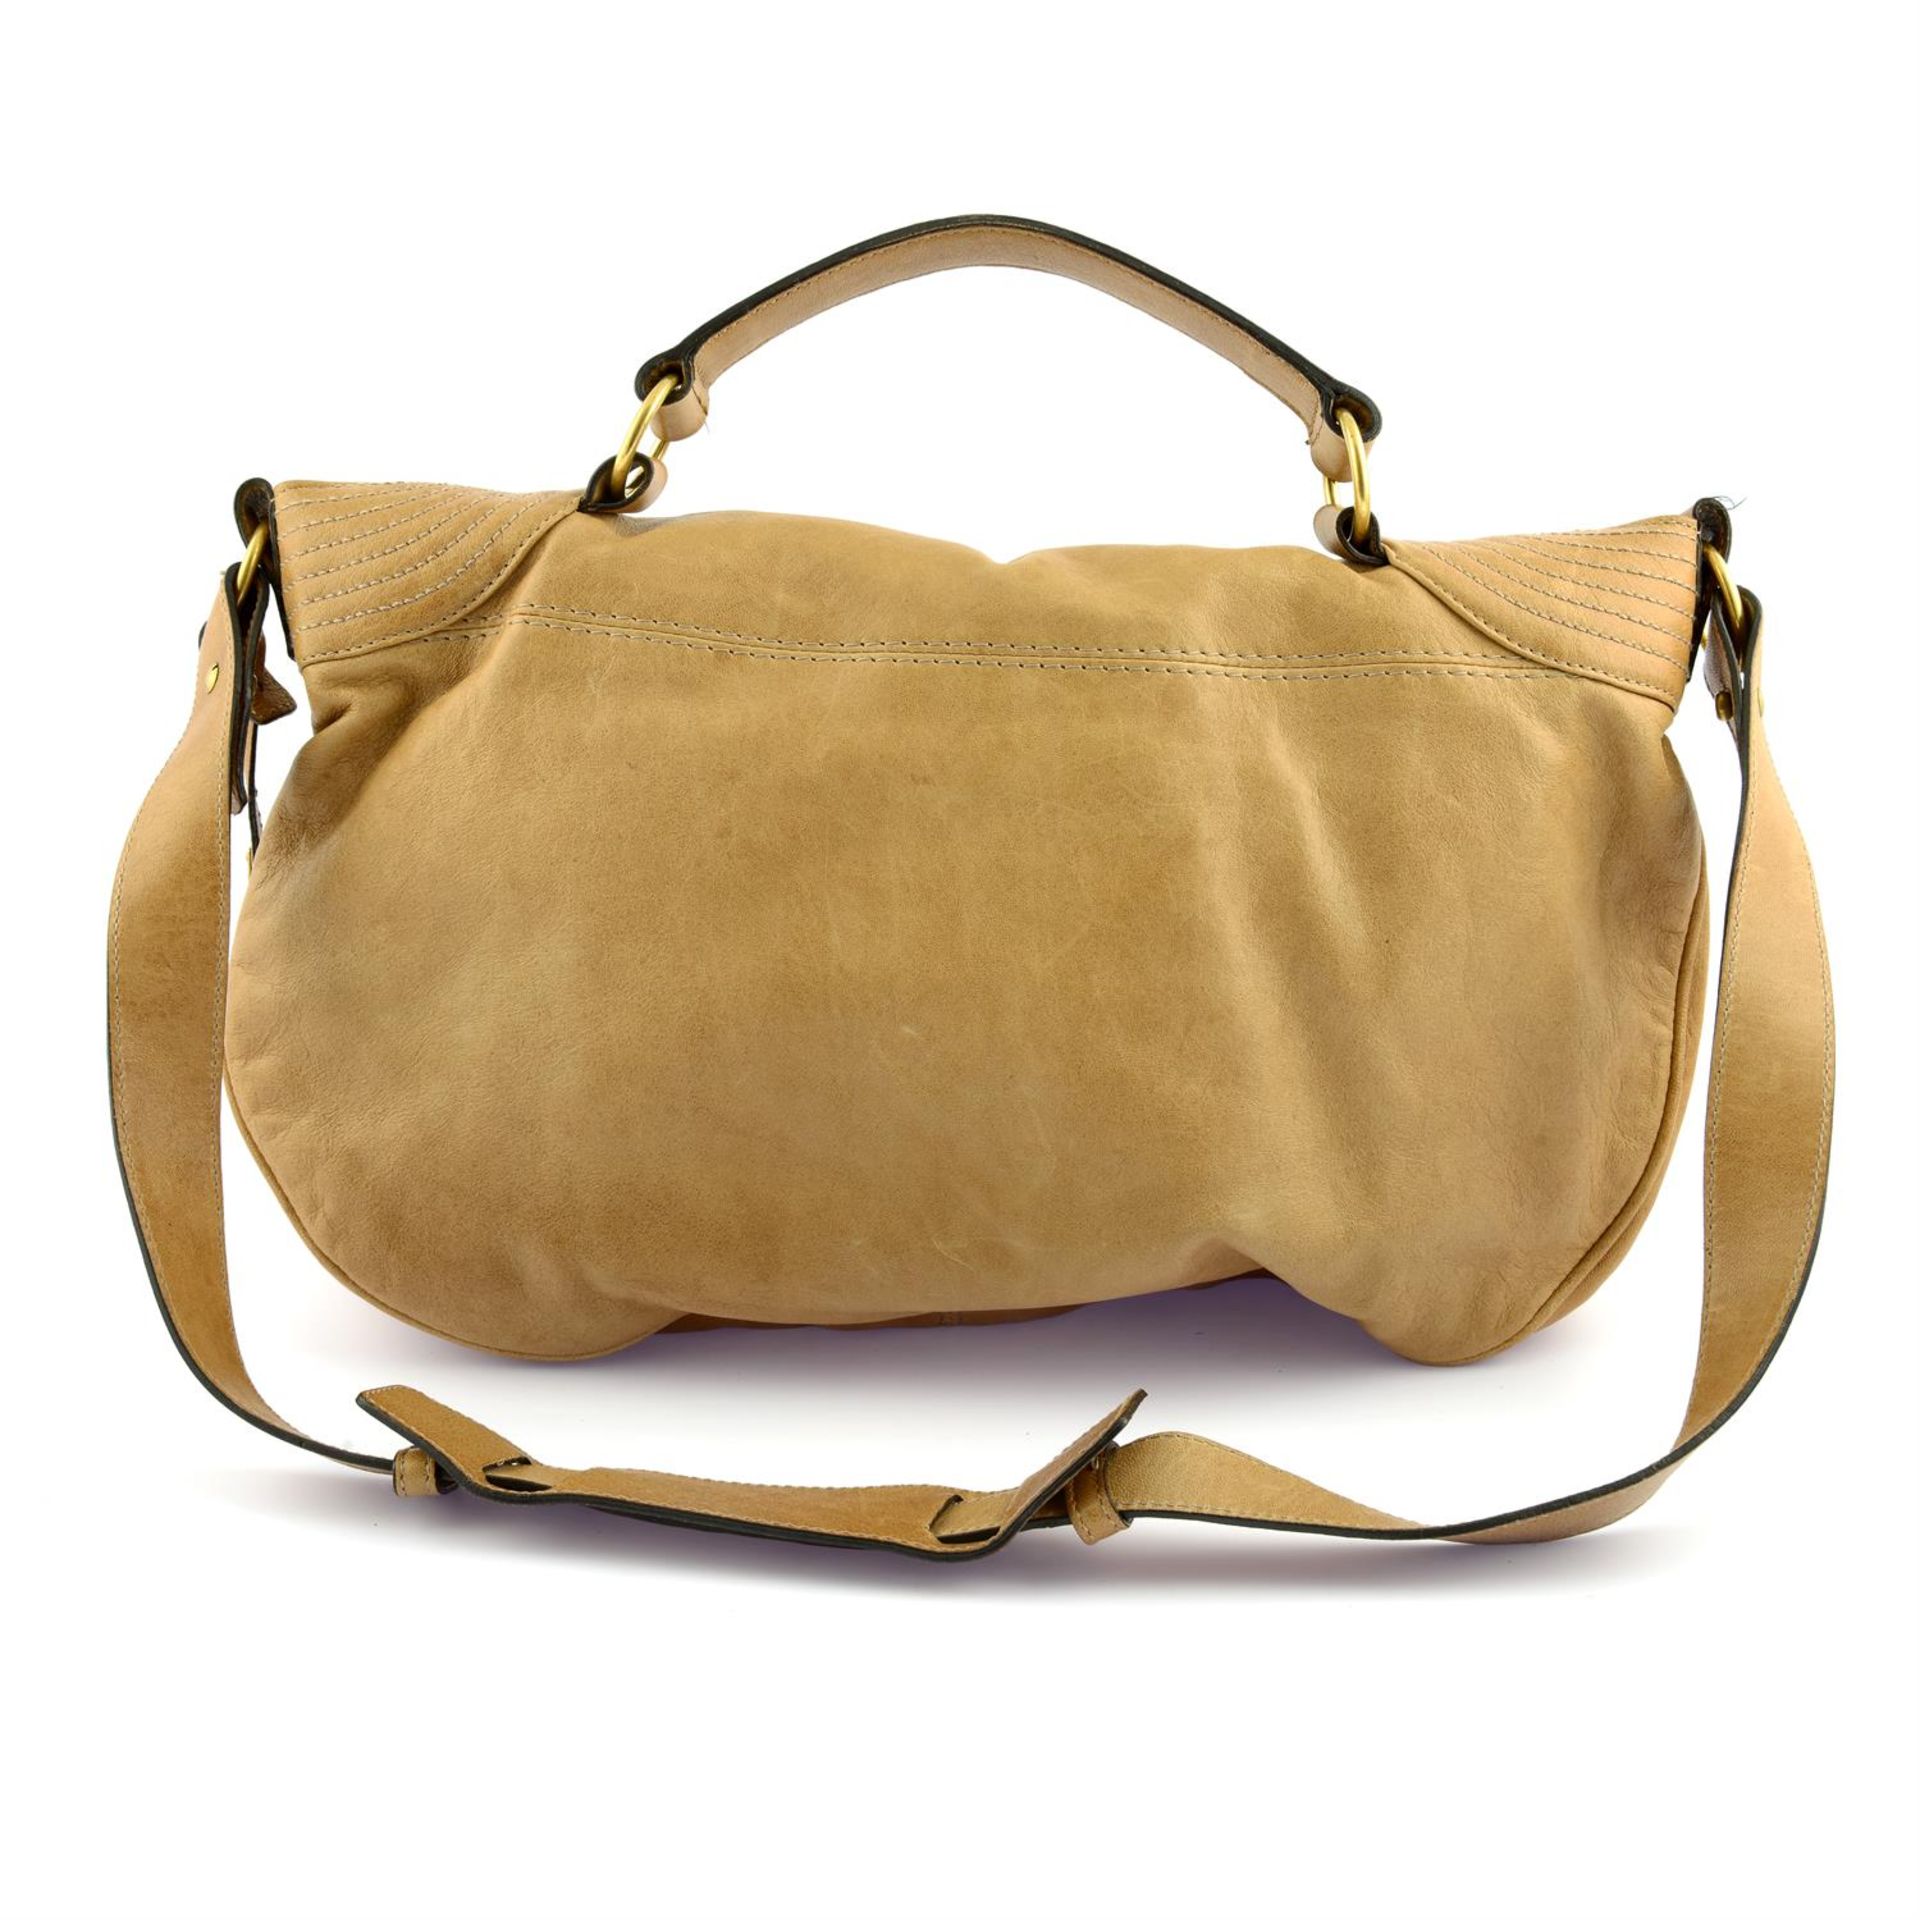 ALEXANDER MCQUEEN - a tan leather Faithfull handbag. - Bild 2 aus 5